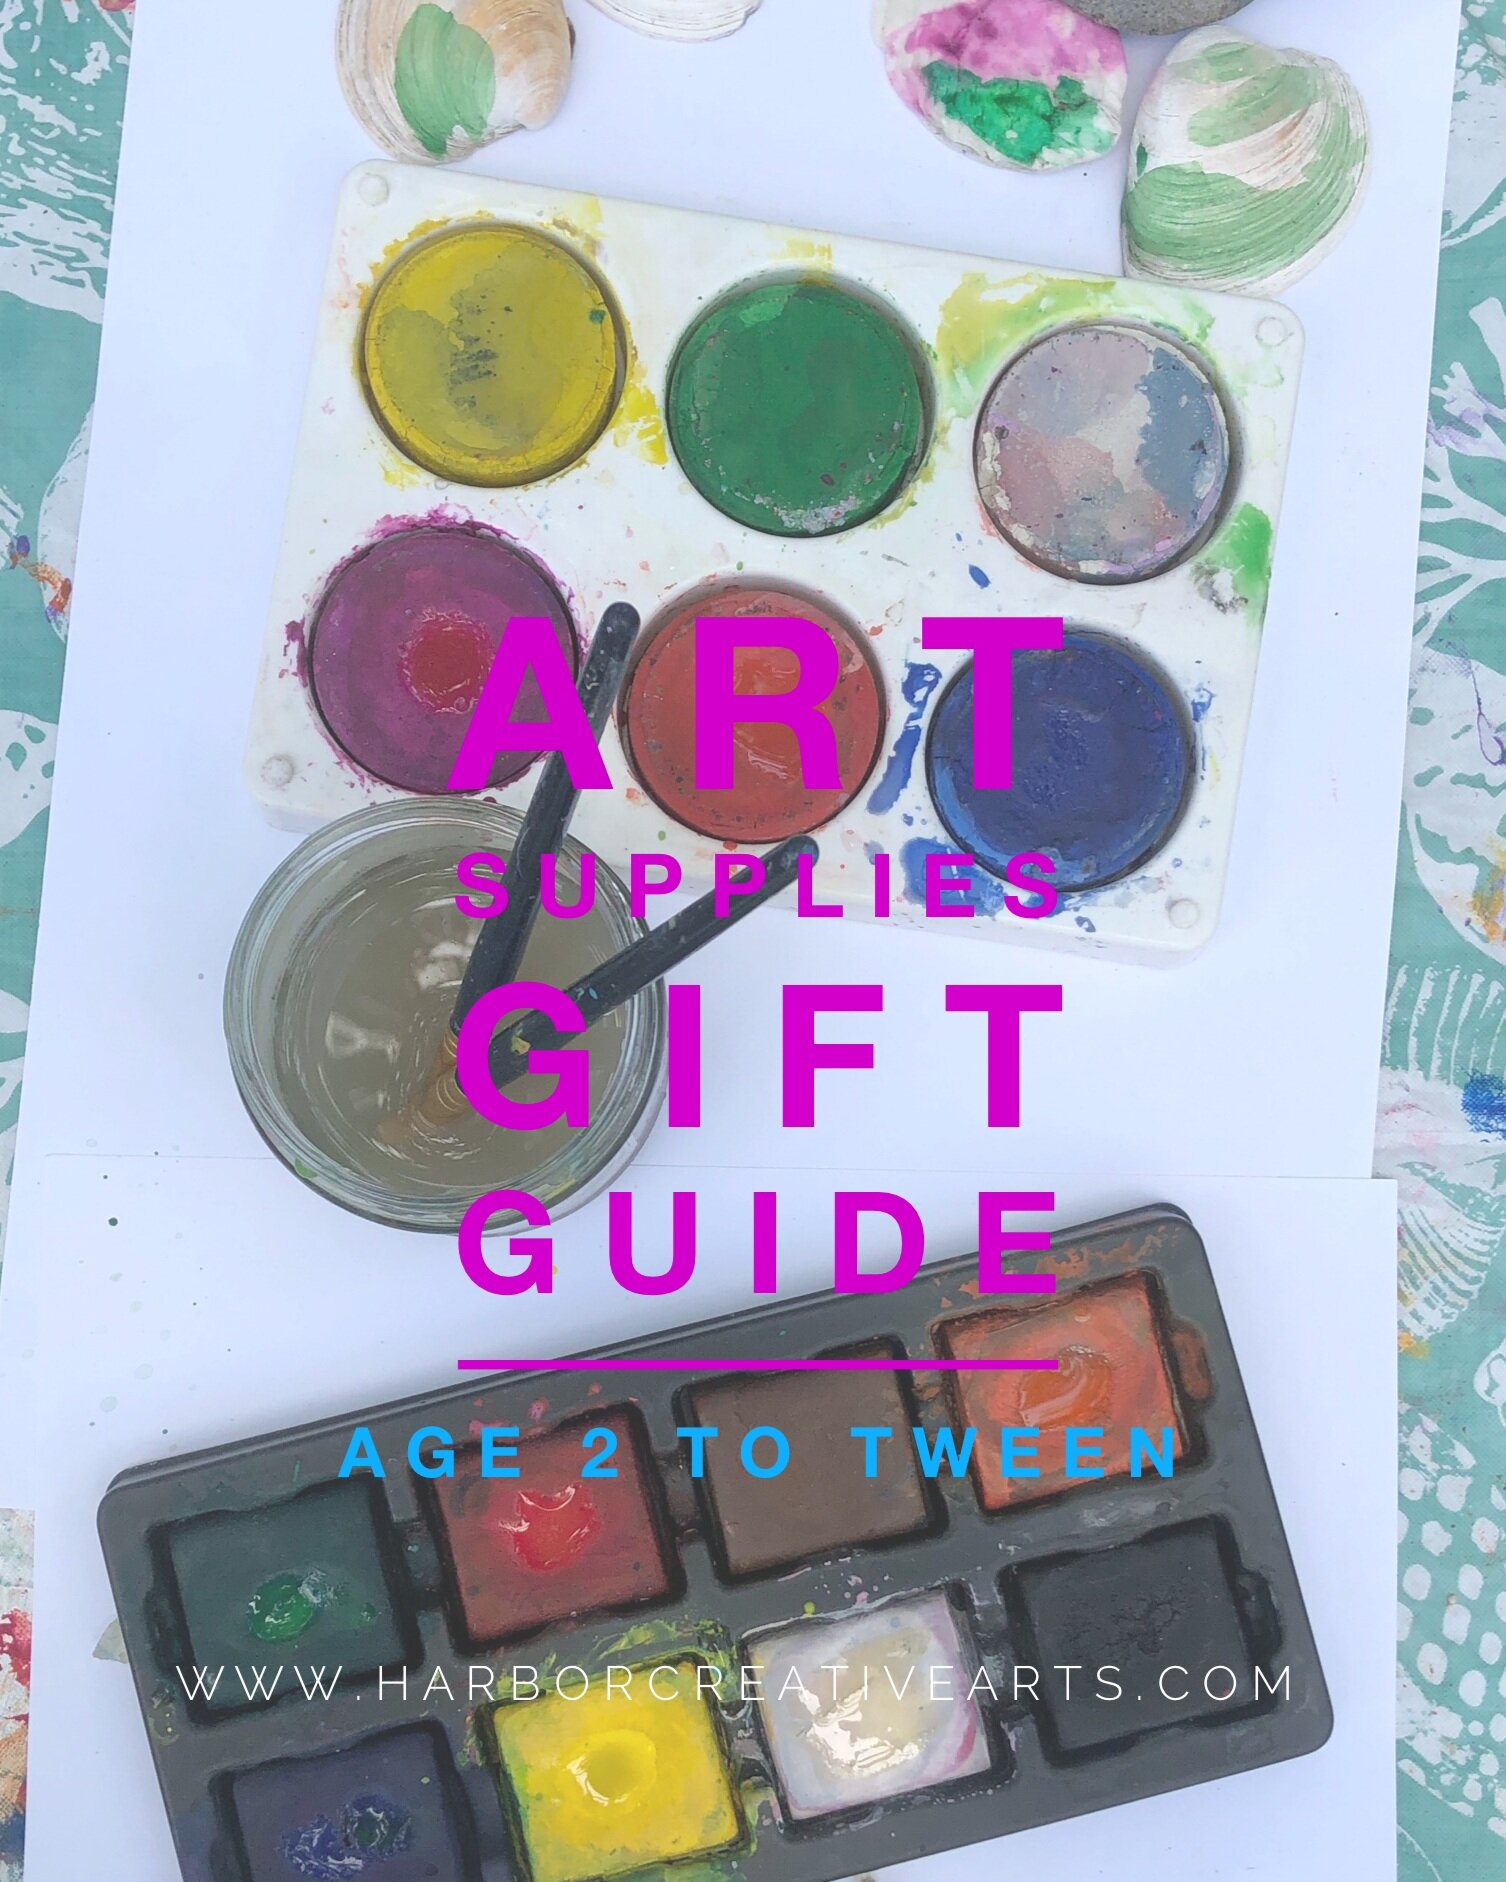 Free Kids' Art Material Guides